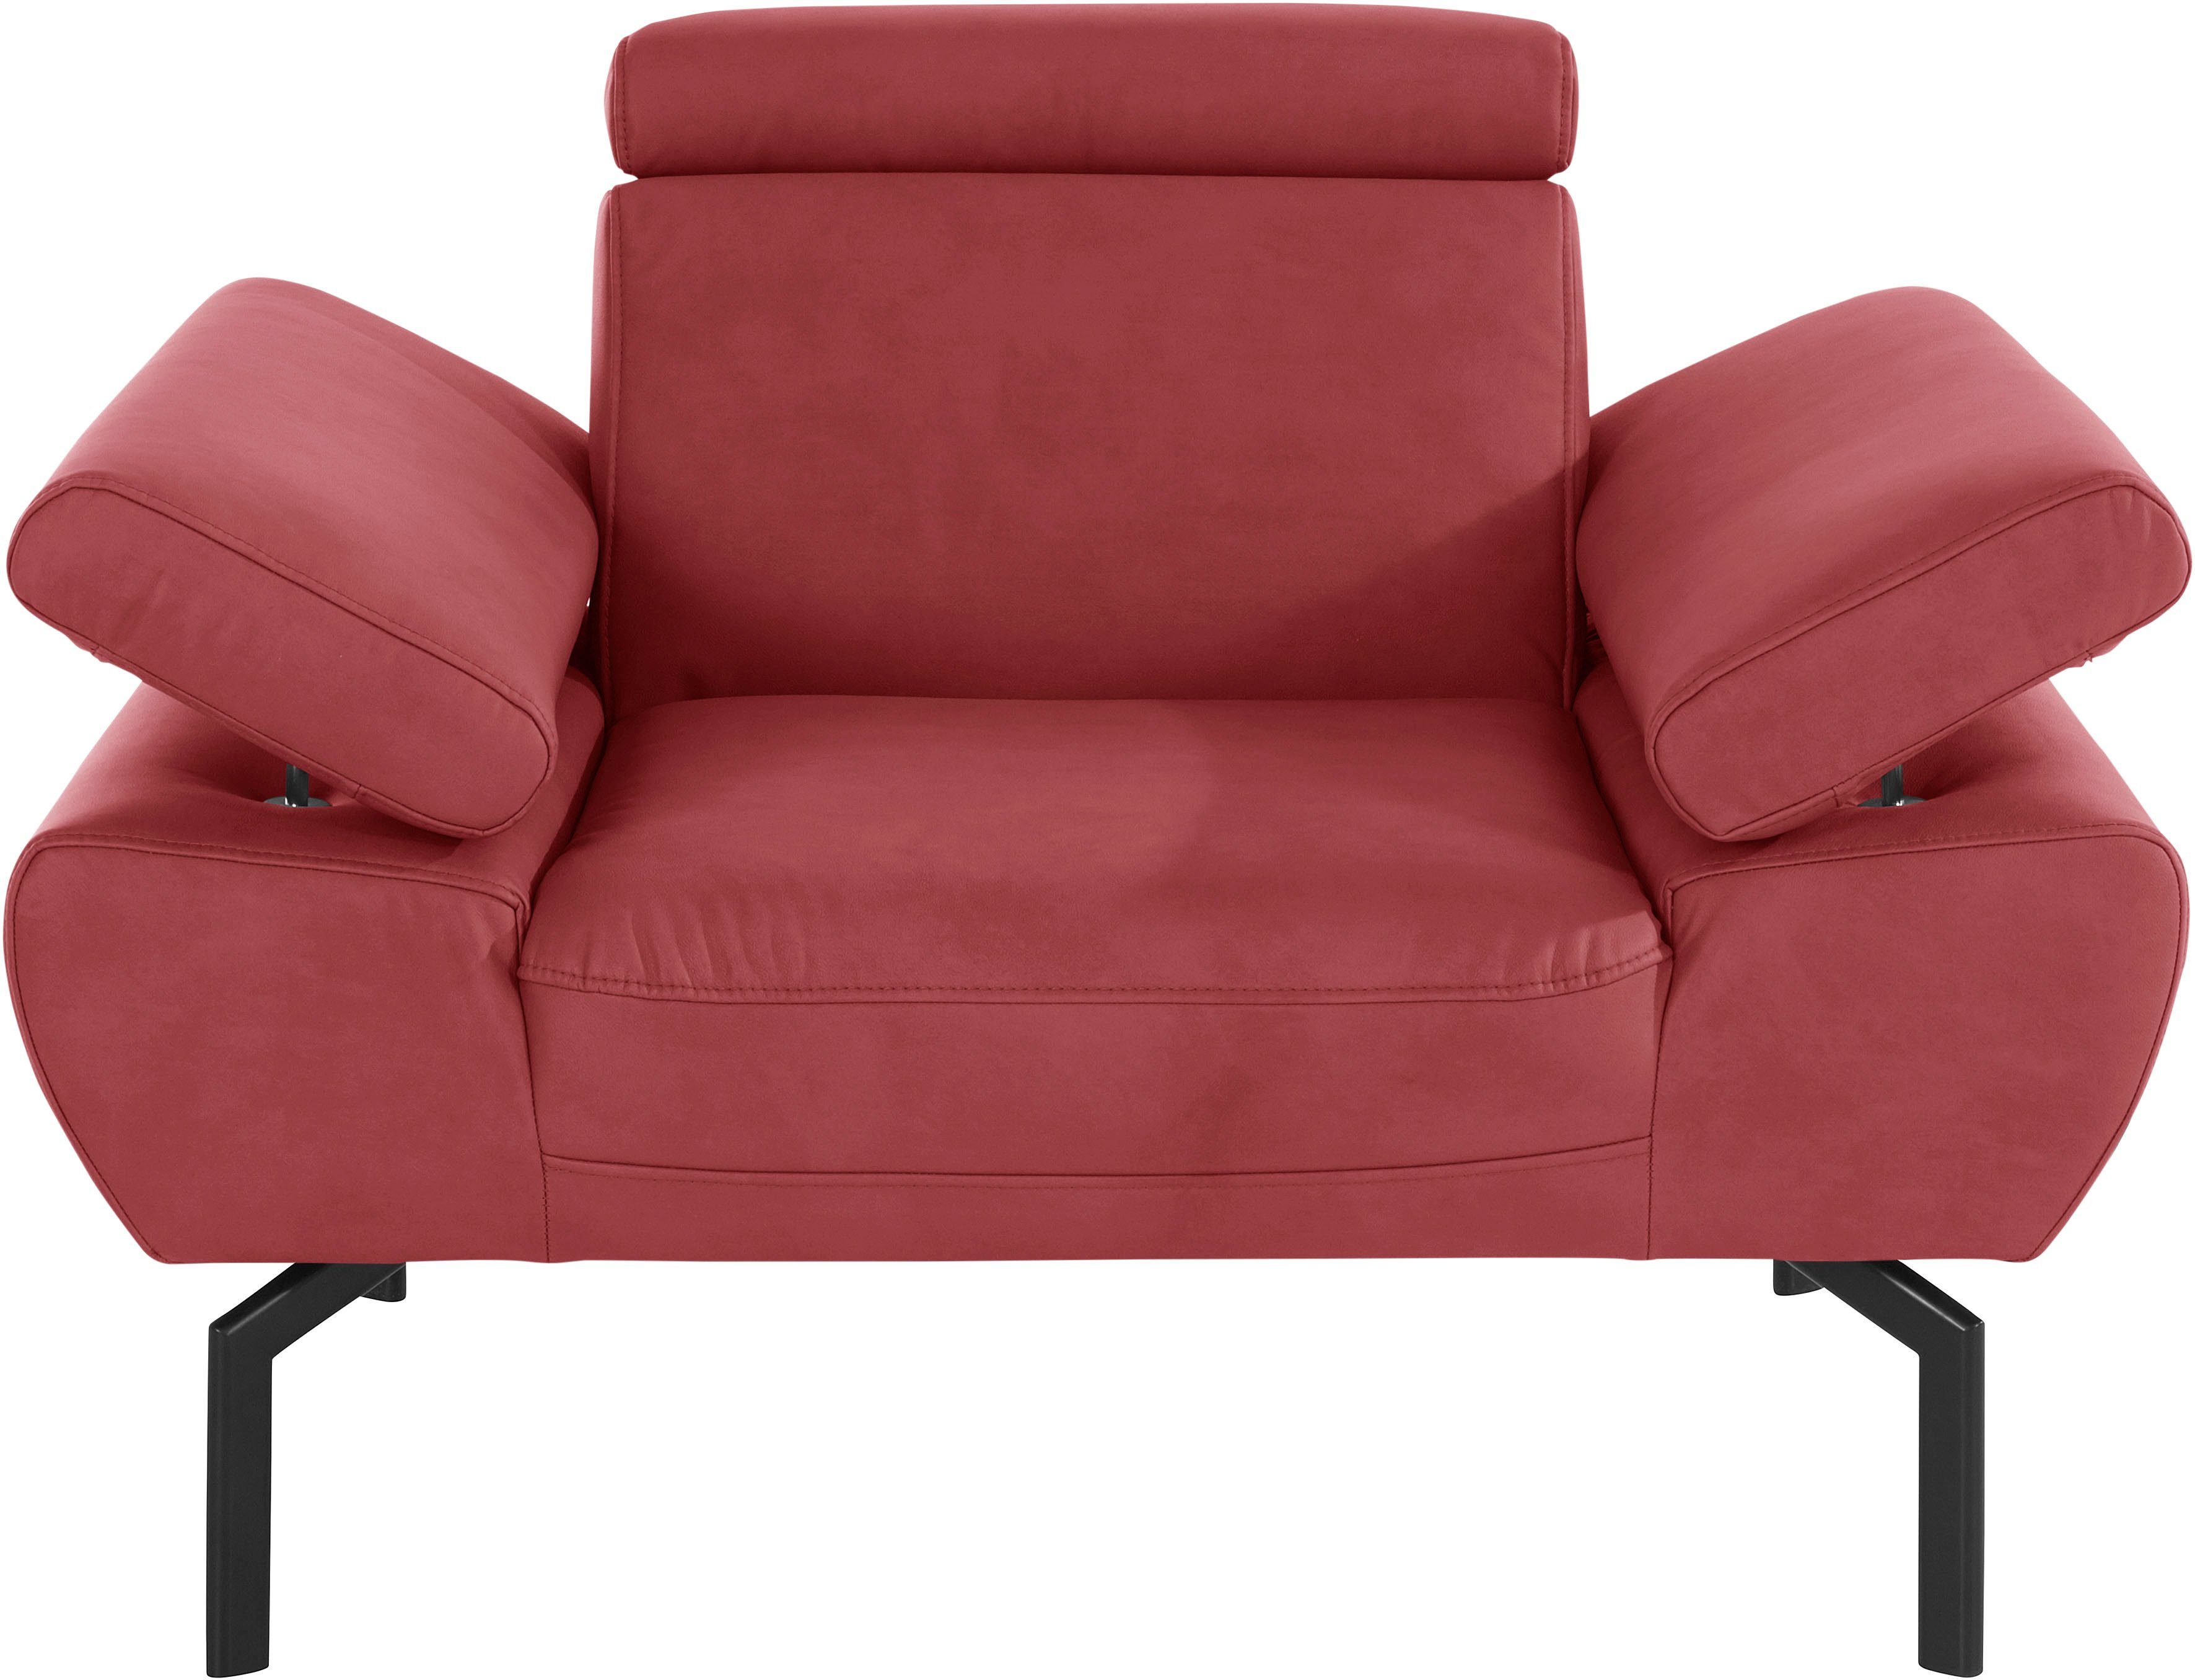 Places of Style Sessel Trapino in mit wahlweise Luxus-Microfaser Luxus, Lederoptik Rückenverstellung